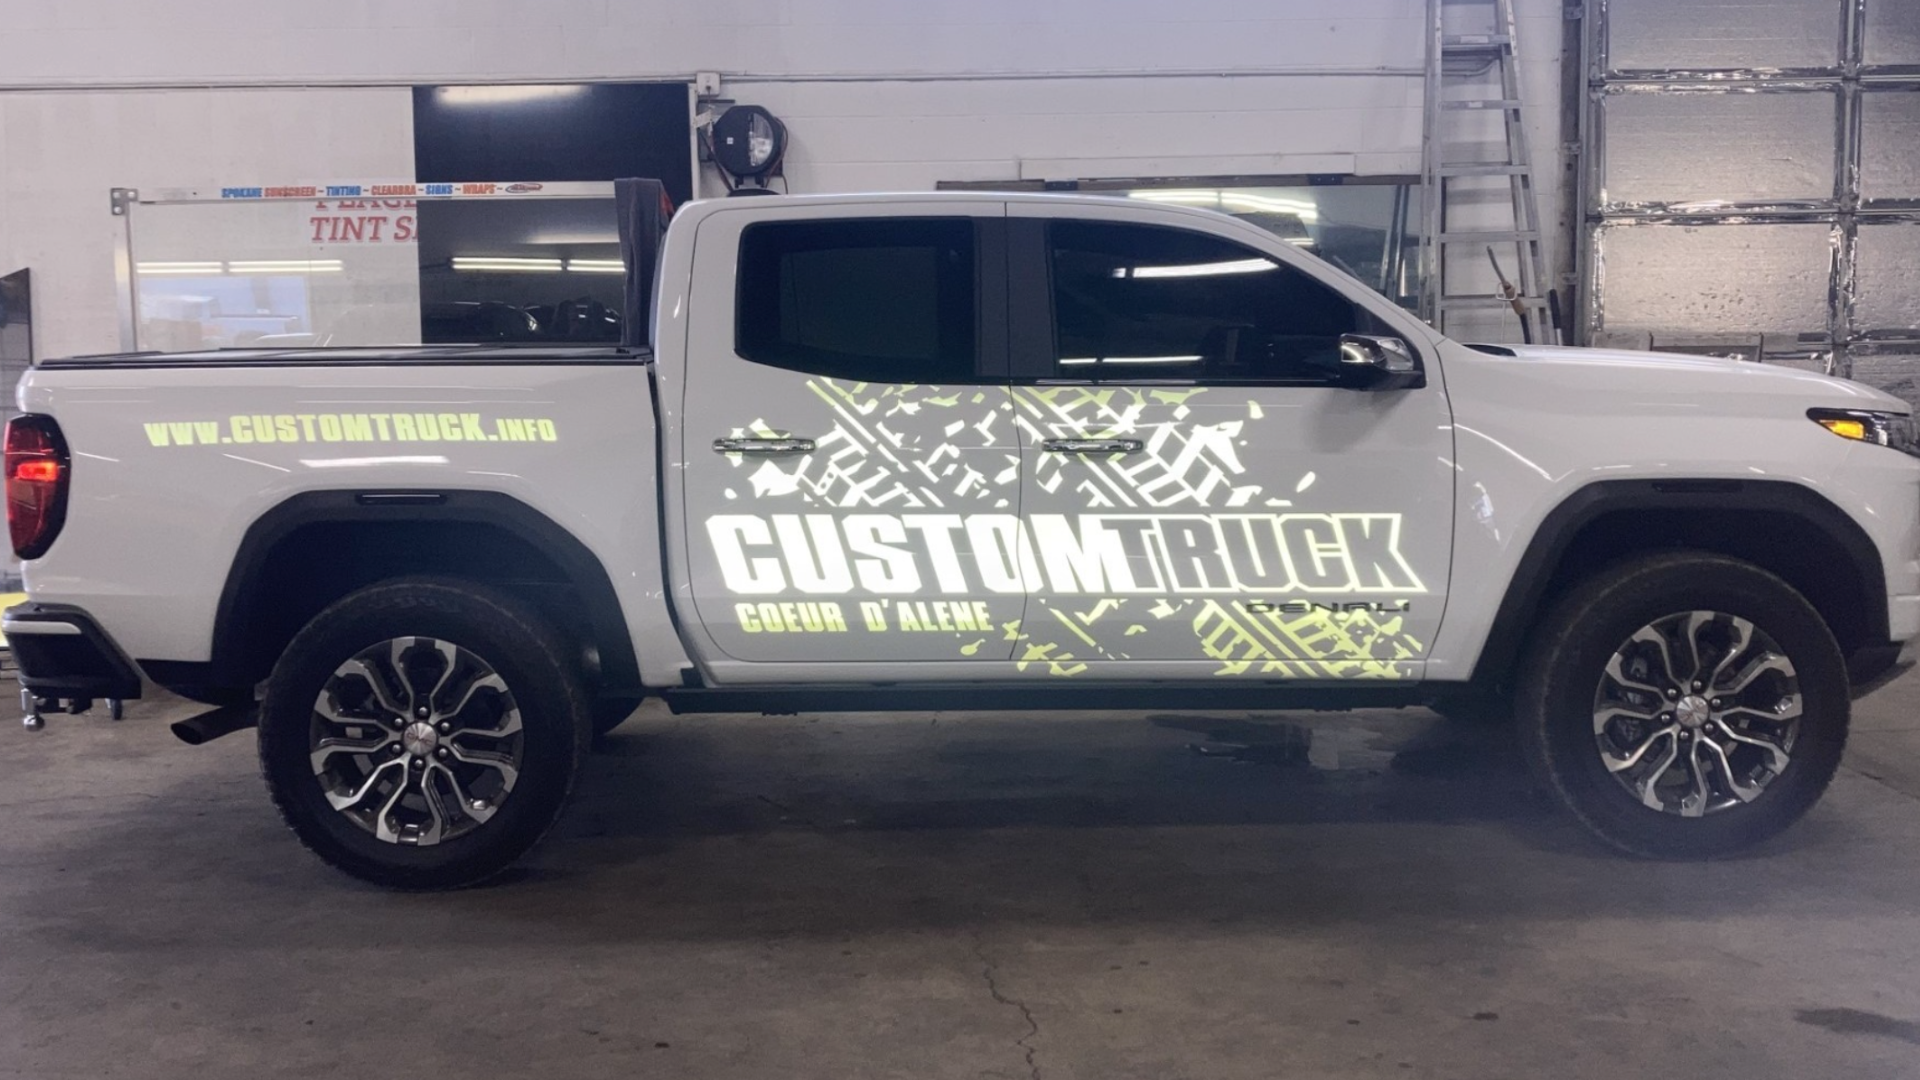 Custom graphics on a white pickup truck advertising 'Custom Truck' in bold, neon-style lettering for Coeur d'Alene dealership.